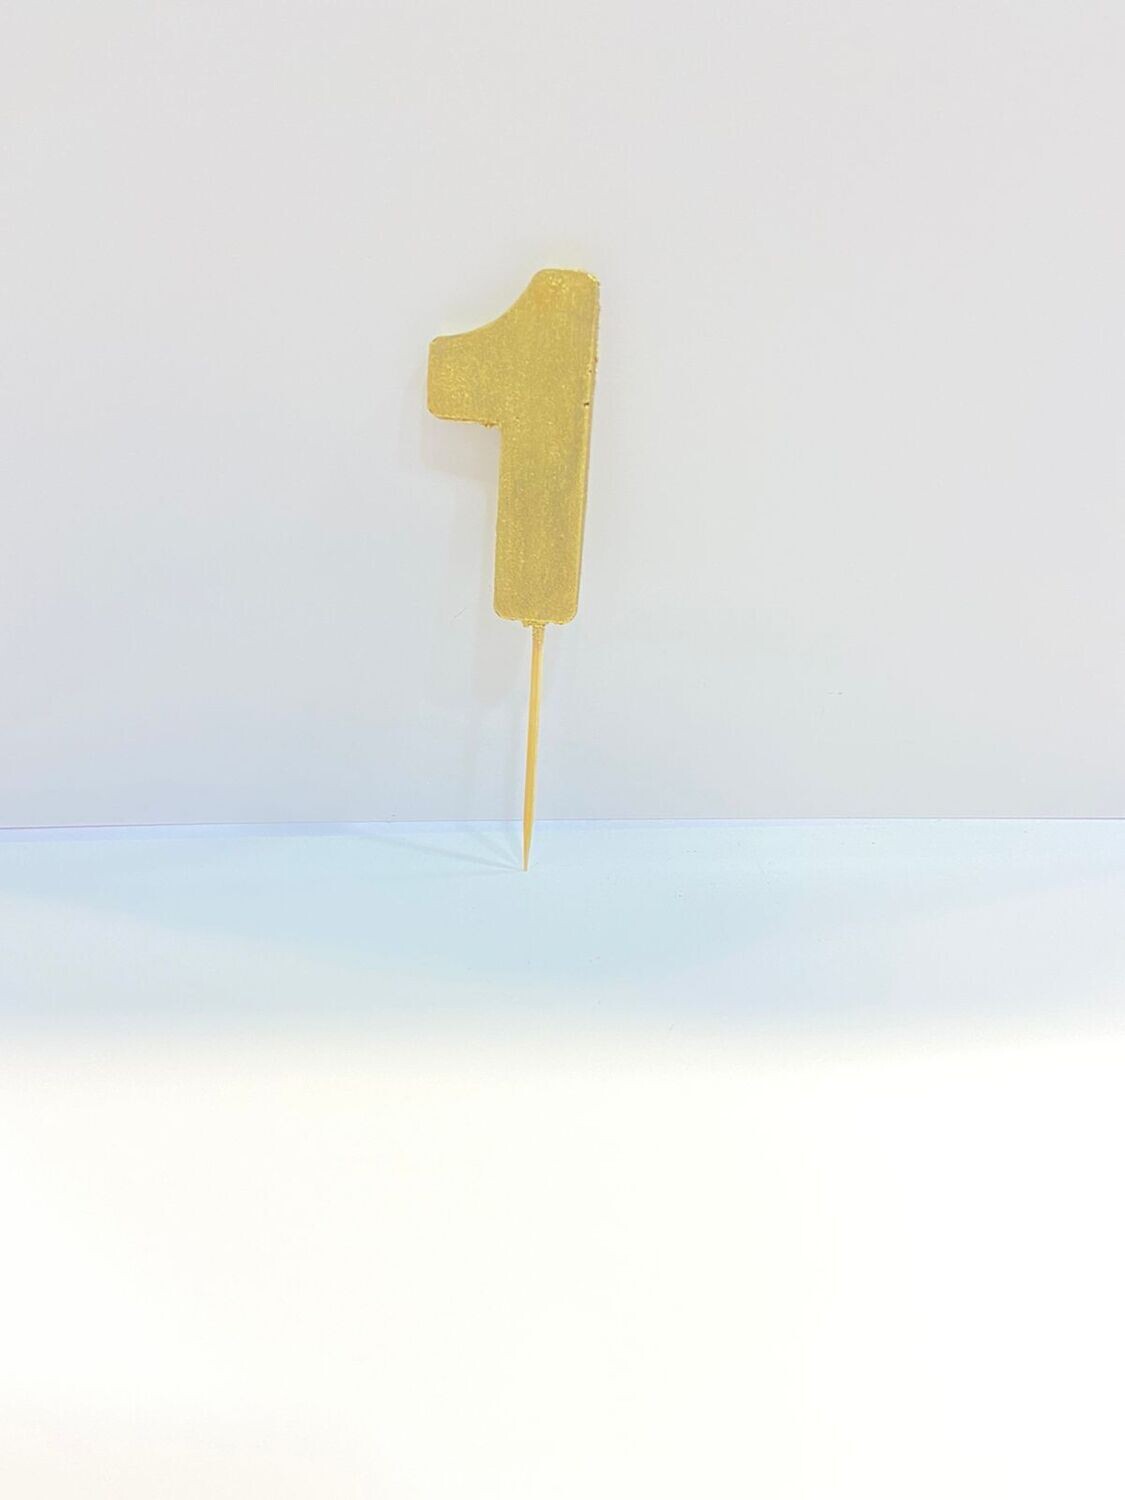 Цифра "1" АНТИЧНАЯ (золотая) на шпажке, из шоколадной глазури